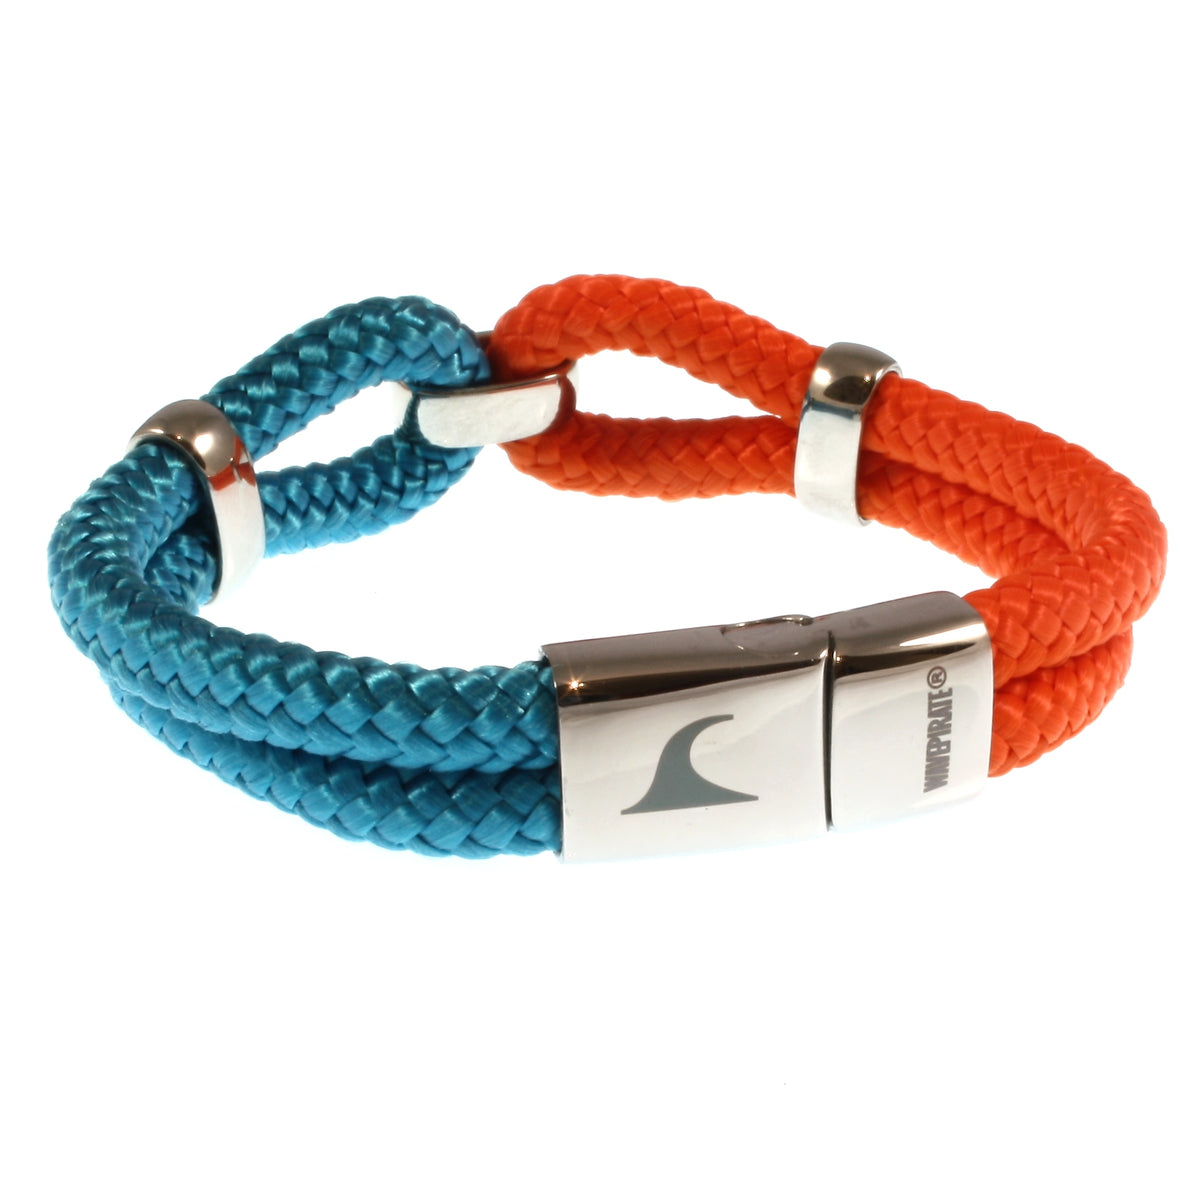 Damen-Segeltau-armband-roma-blau-orange-geflochten-Edelstahlverschluss-hinten-wavepirate-shop-st